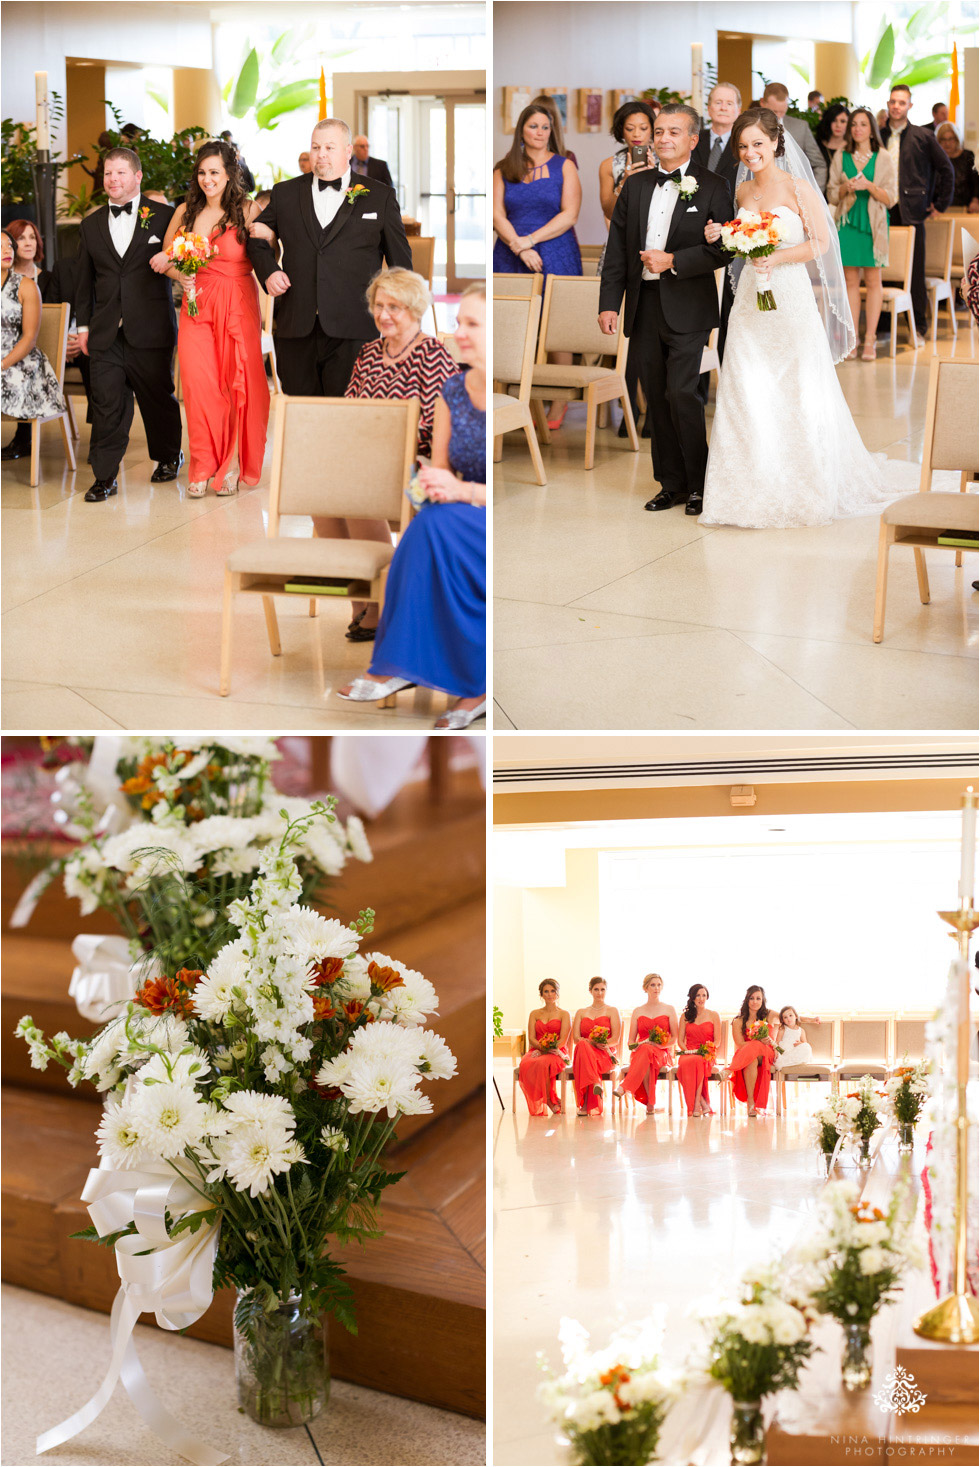 Wedding ceremony at Saint Josephs University campus in Philadelphia, Pennsylvania - Blog of Nina Hintringer Photography - Wedding Photography, Wedding Reportage and Destination Weddings